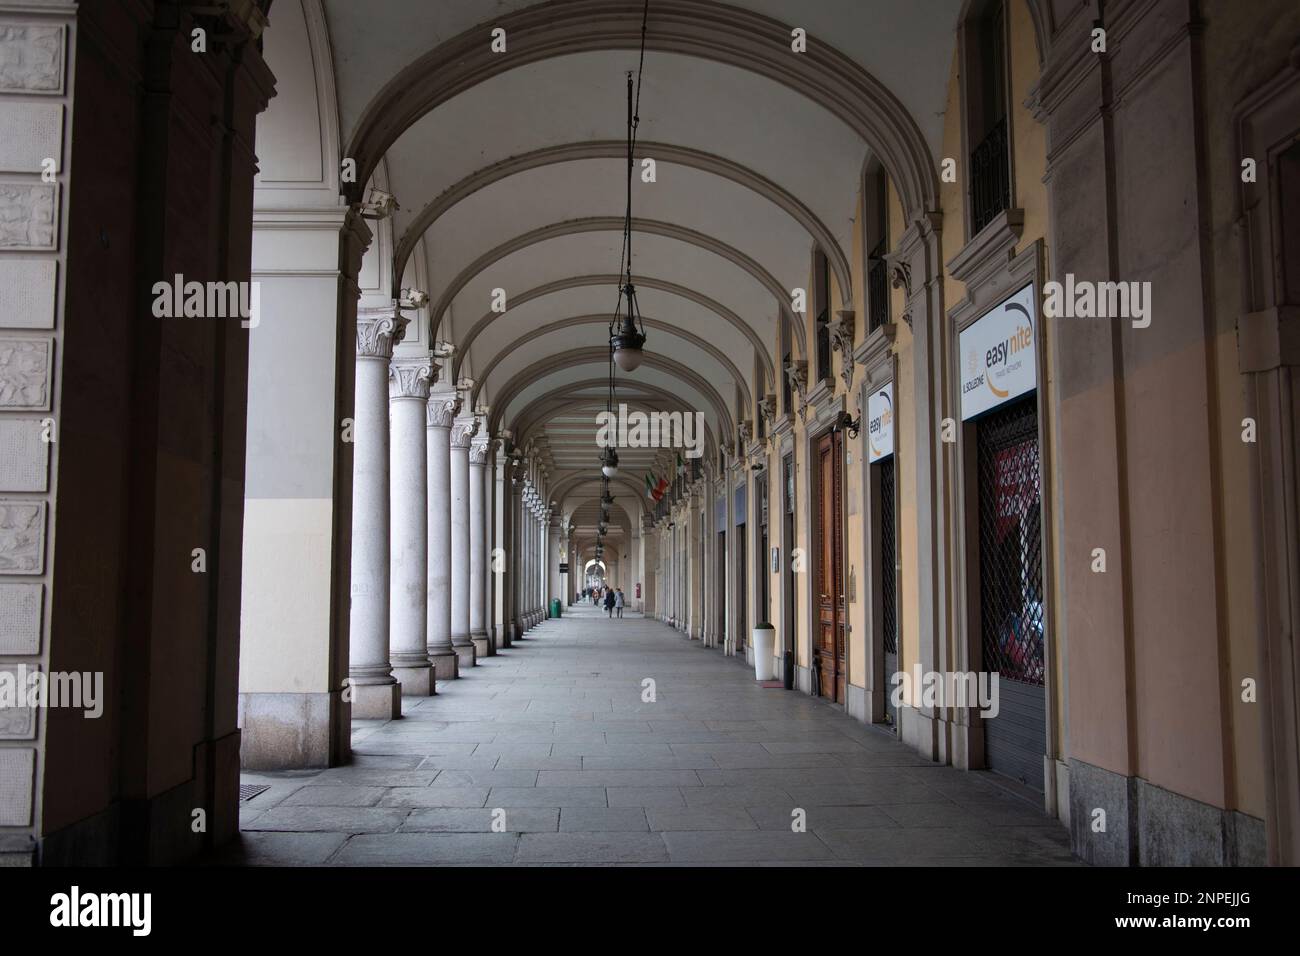 Monumentale Turiner Arkaden, große Fußgängerwege in Turin, Italien Stockfoto